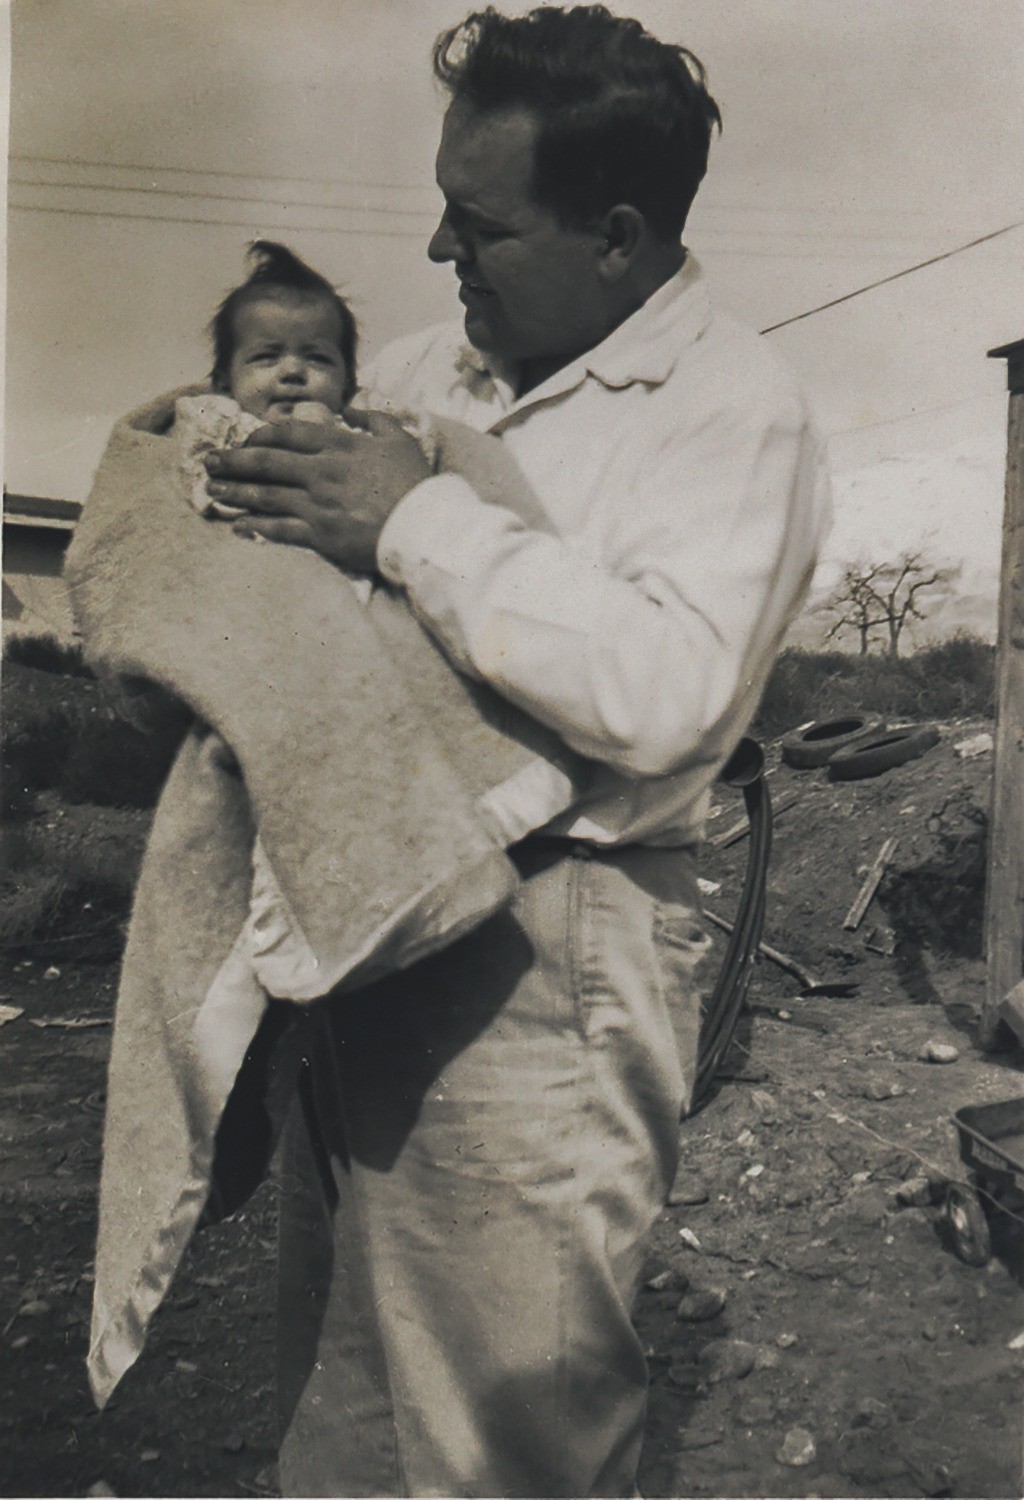 Harold and Joyce around 1950